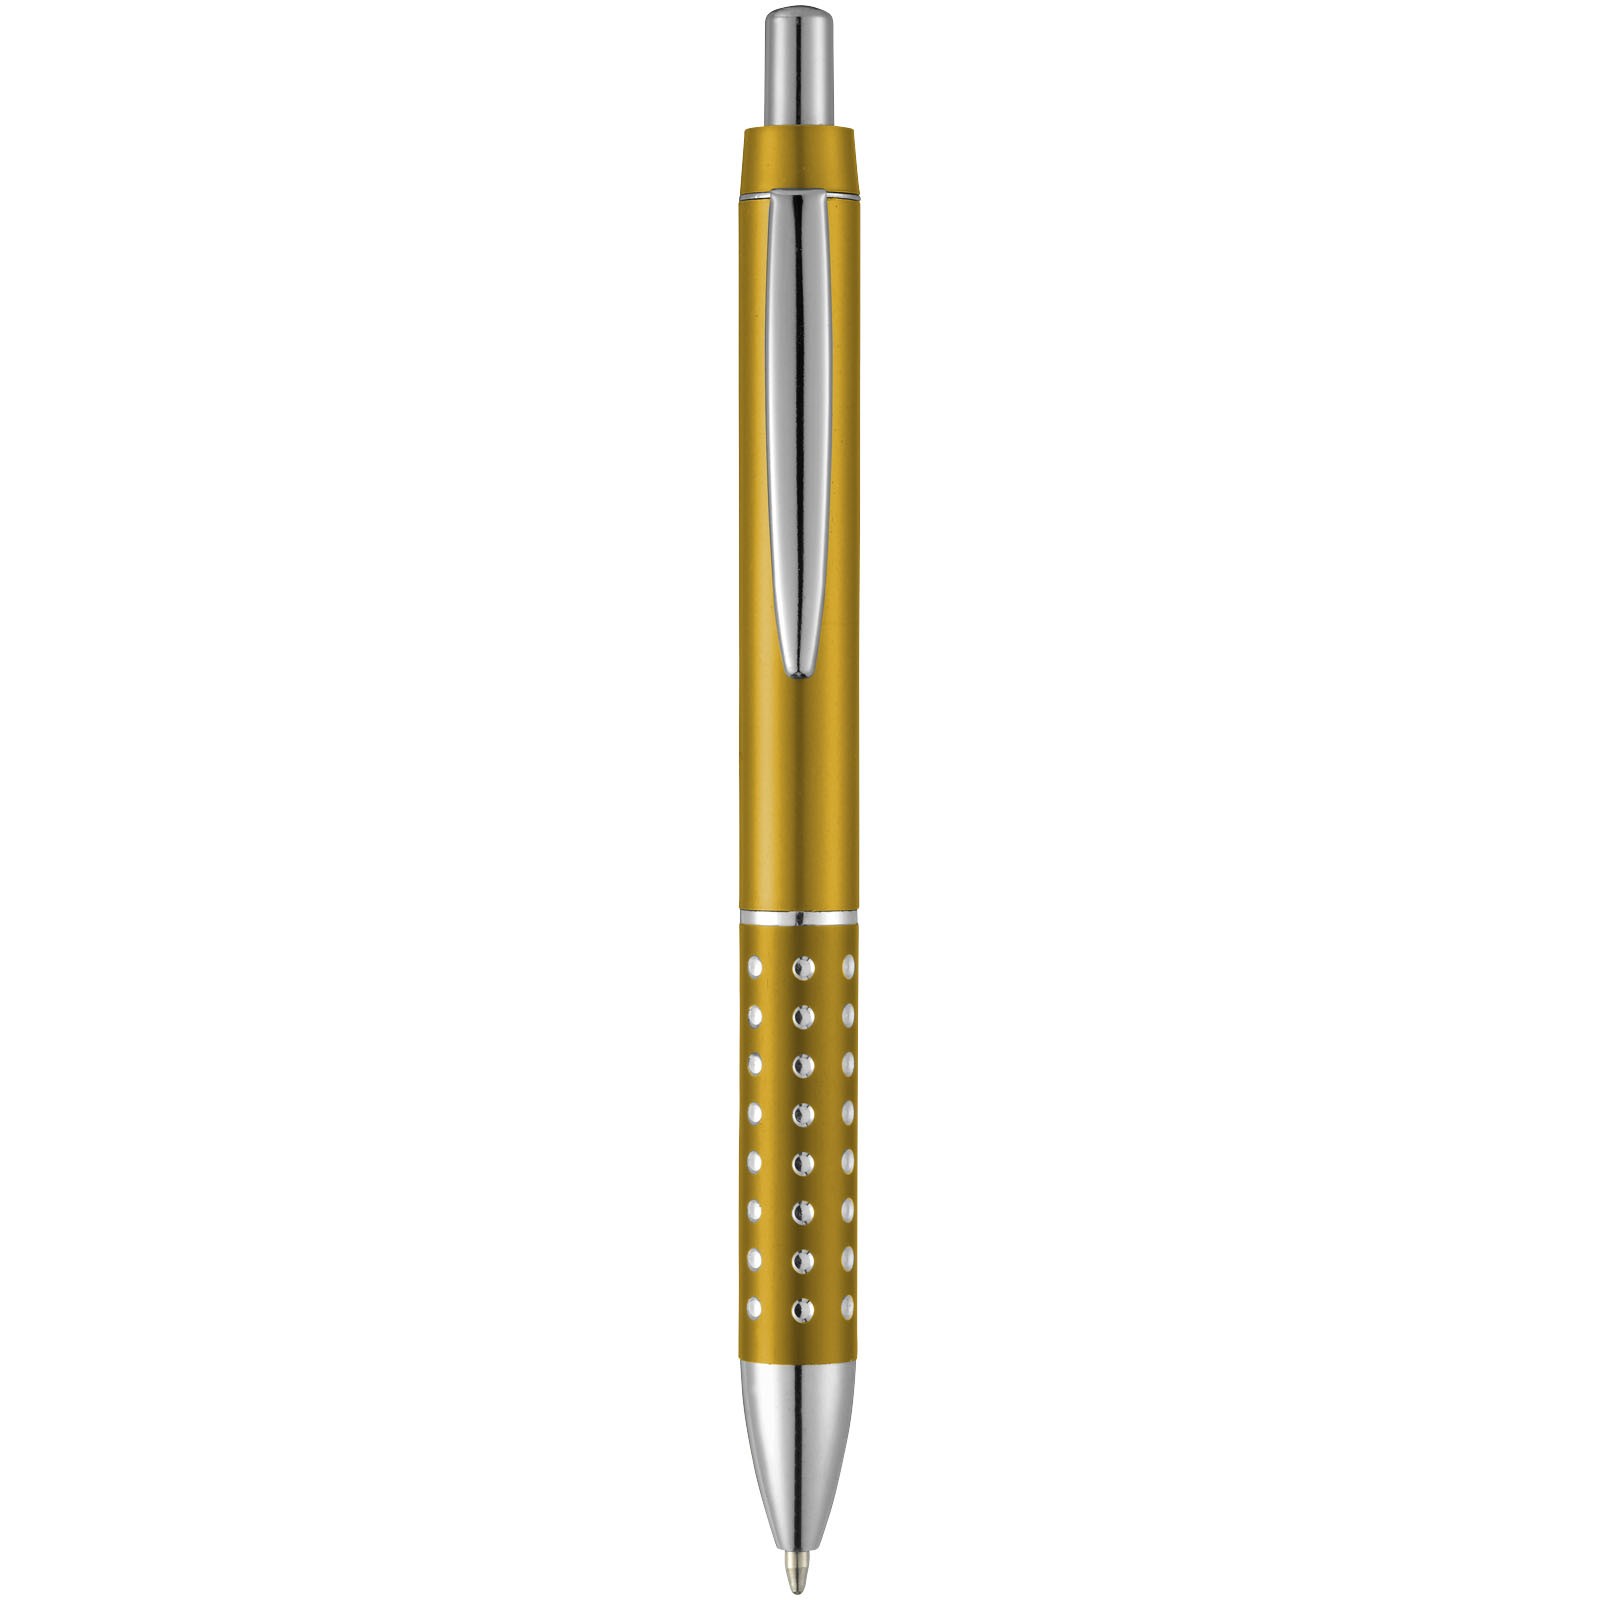 Bling ballpoint pen with aluminium grip - Yellow